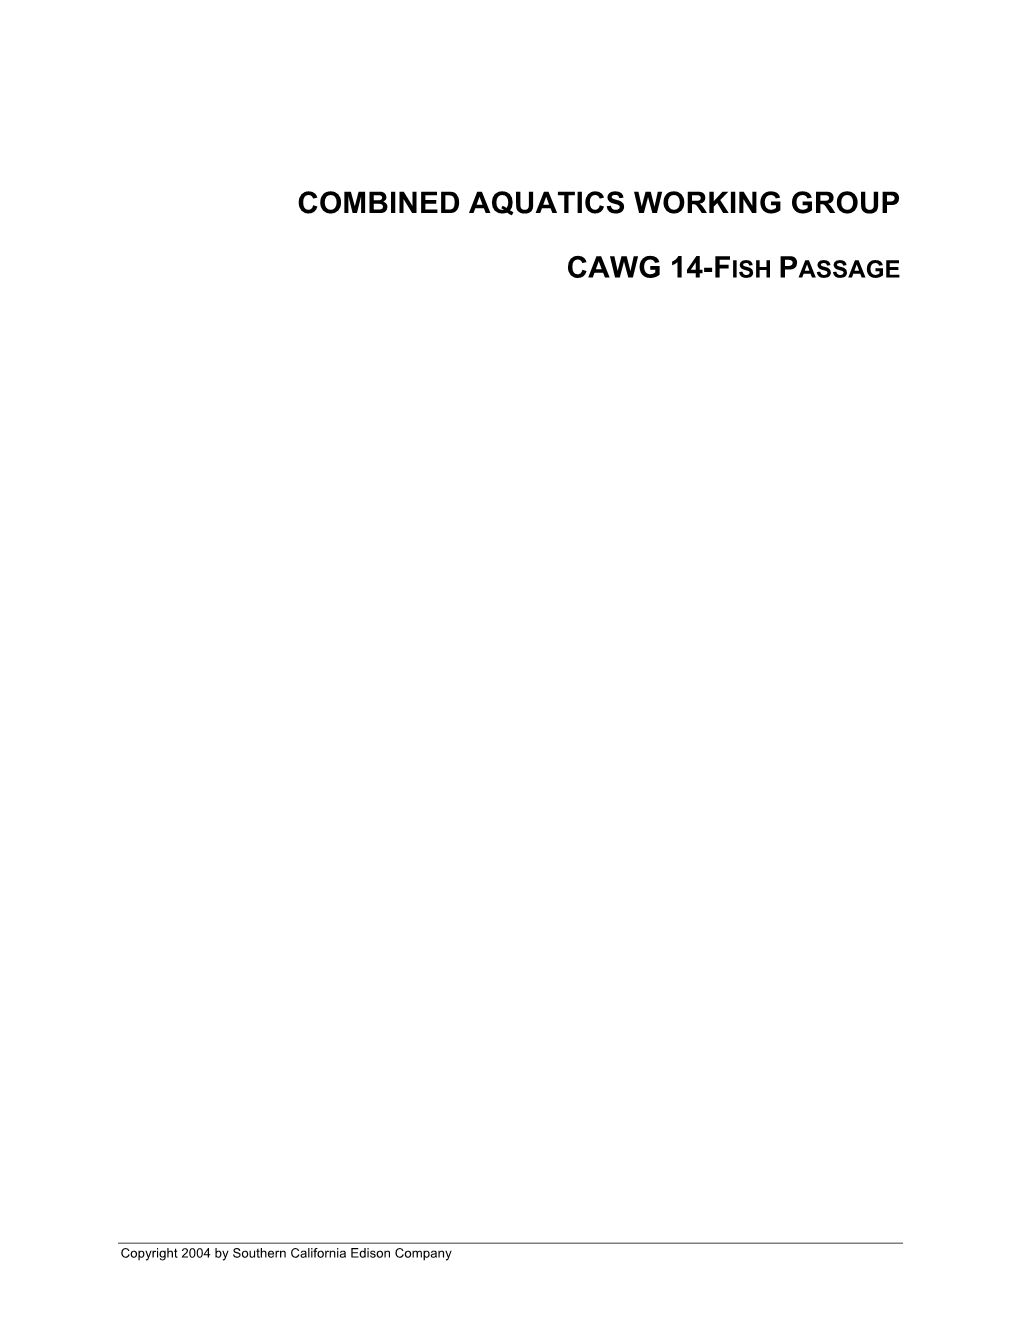 Combined Aquatics Working Group Cawg 14-Fish